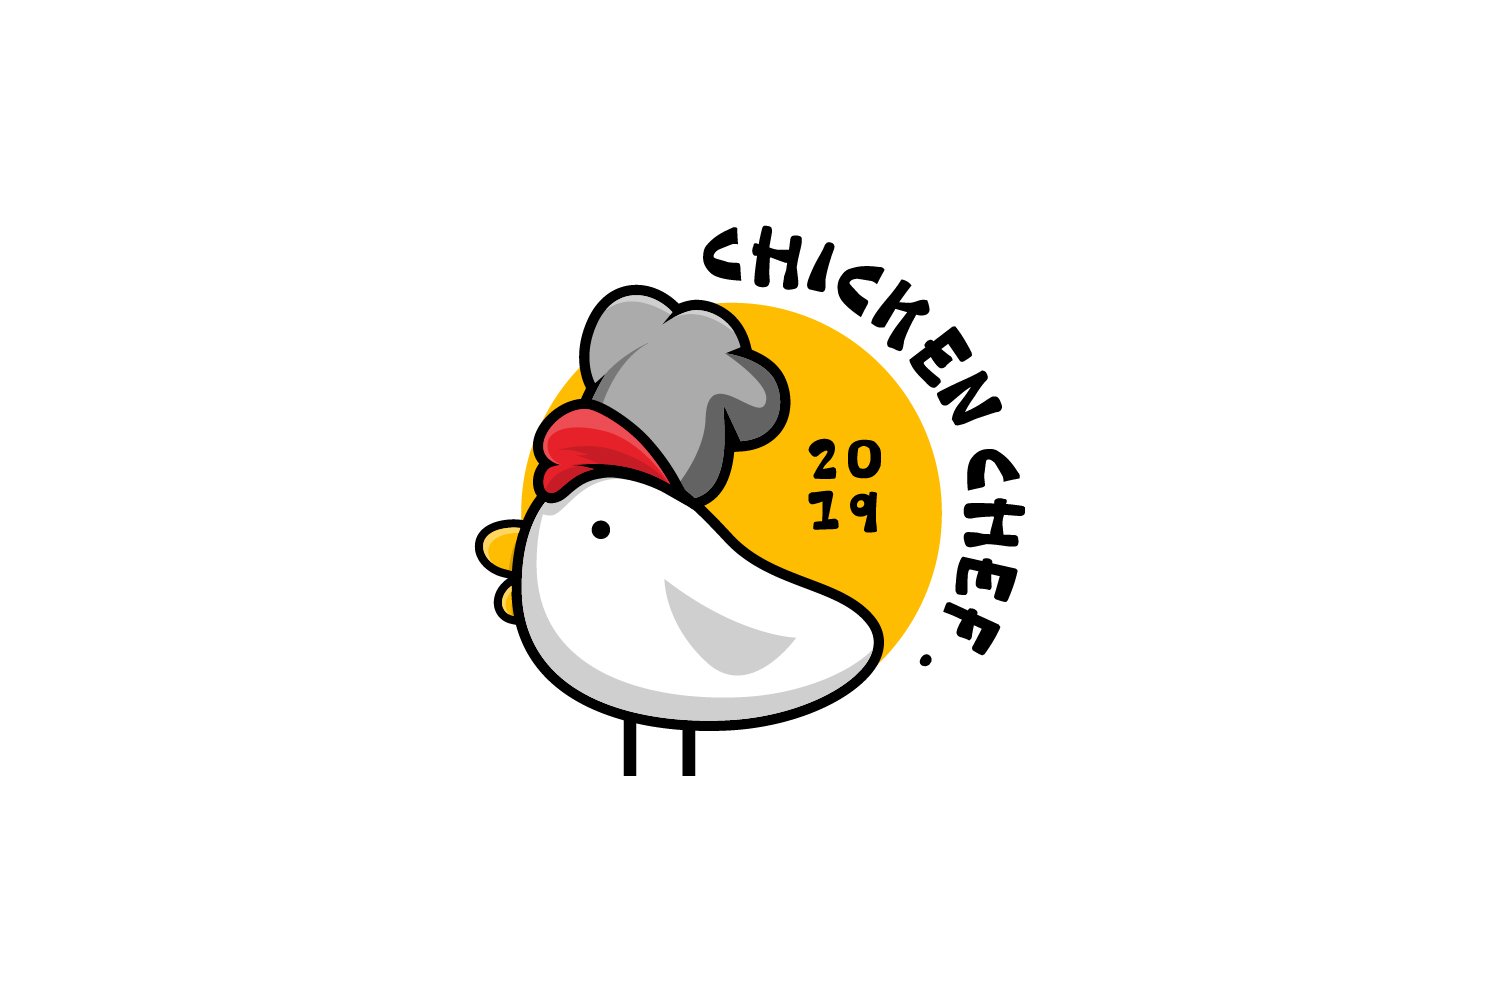 Chicken Chef Logo cover image.